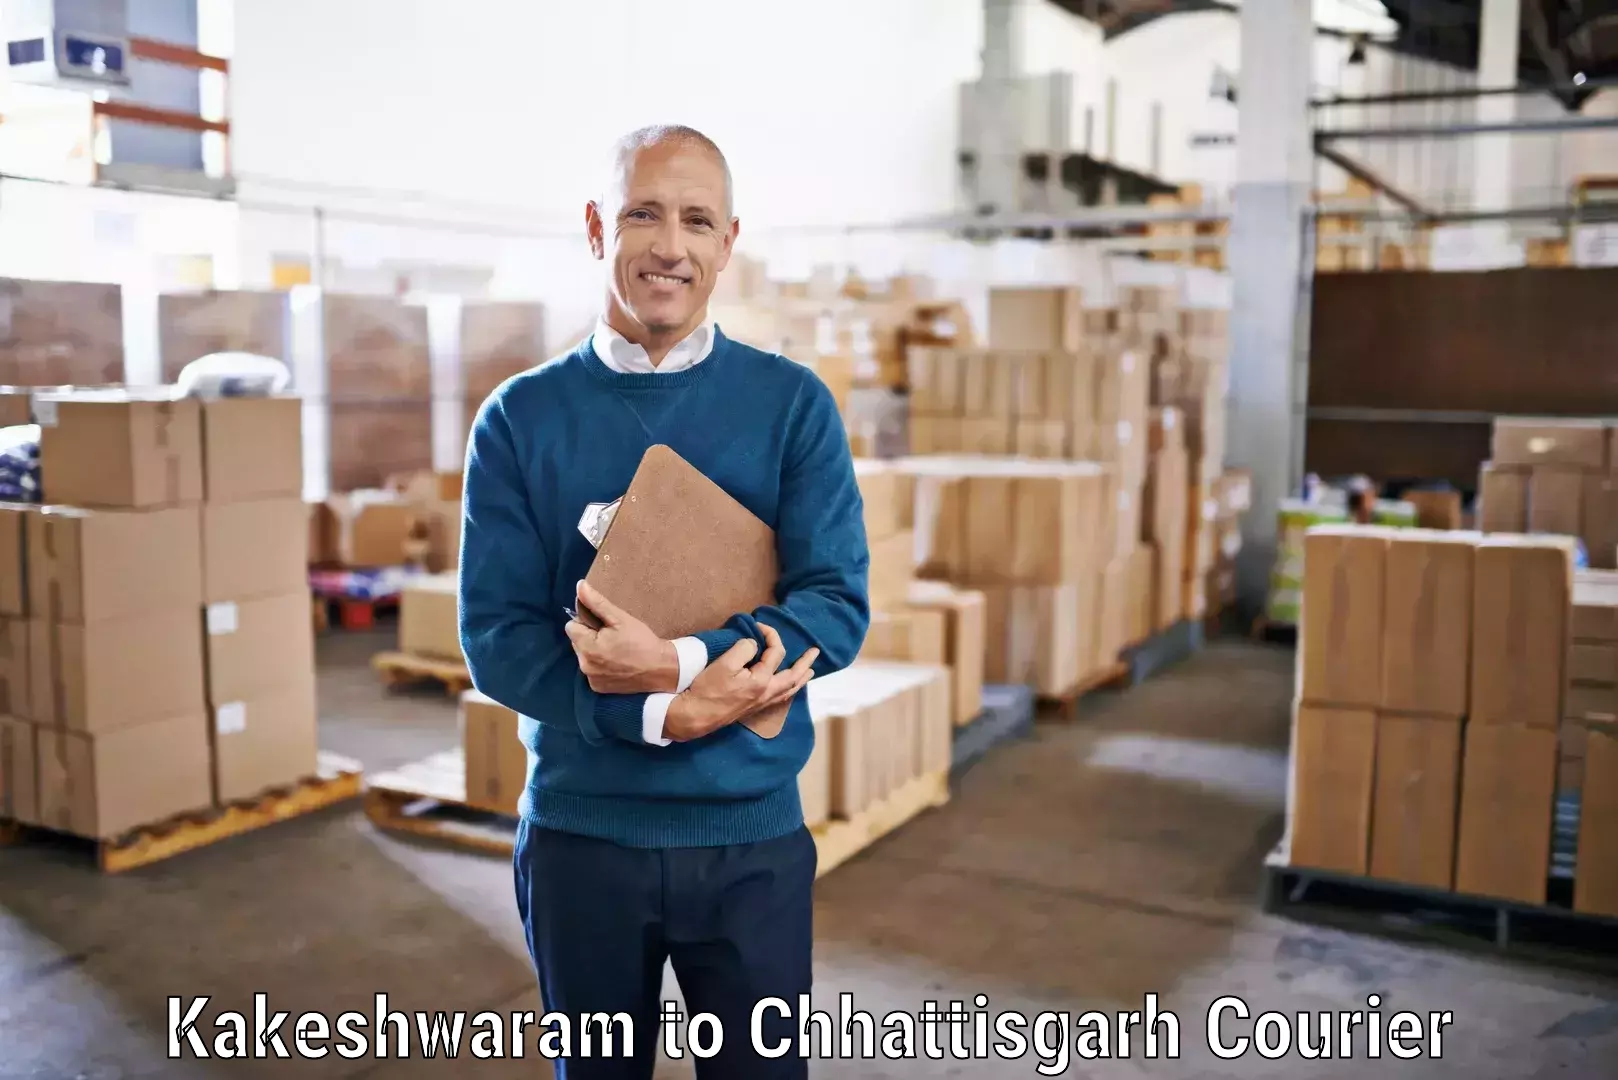 Package delivery network Kakeshwaram to Bijapur Chhattisgarh